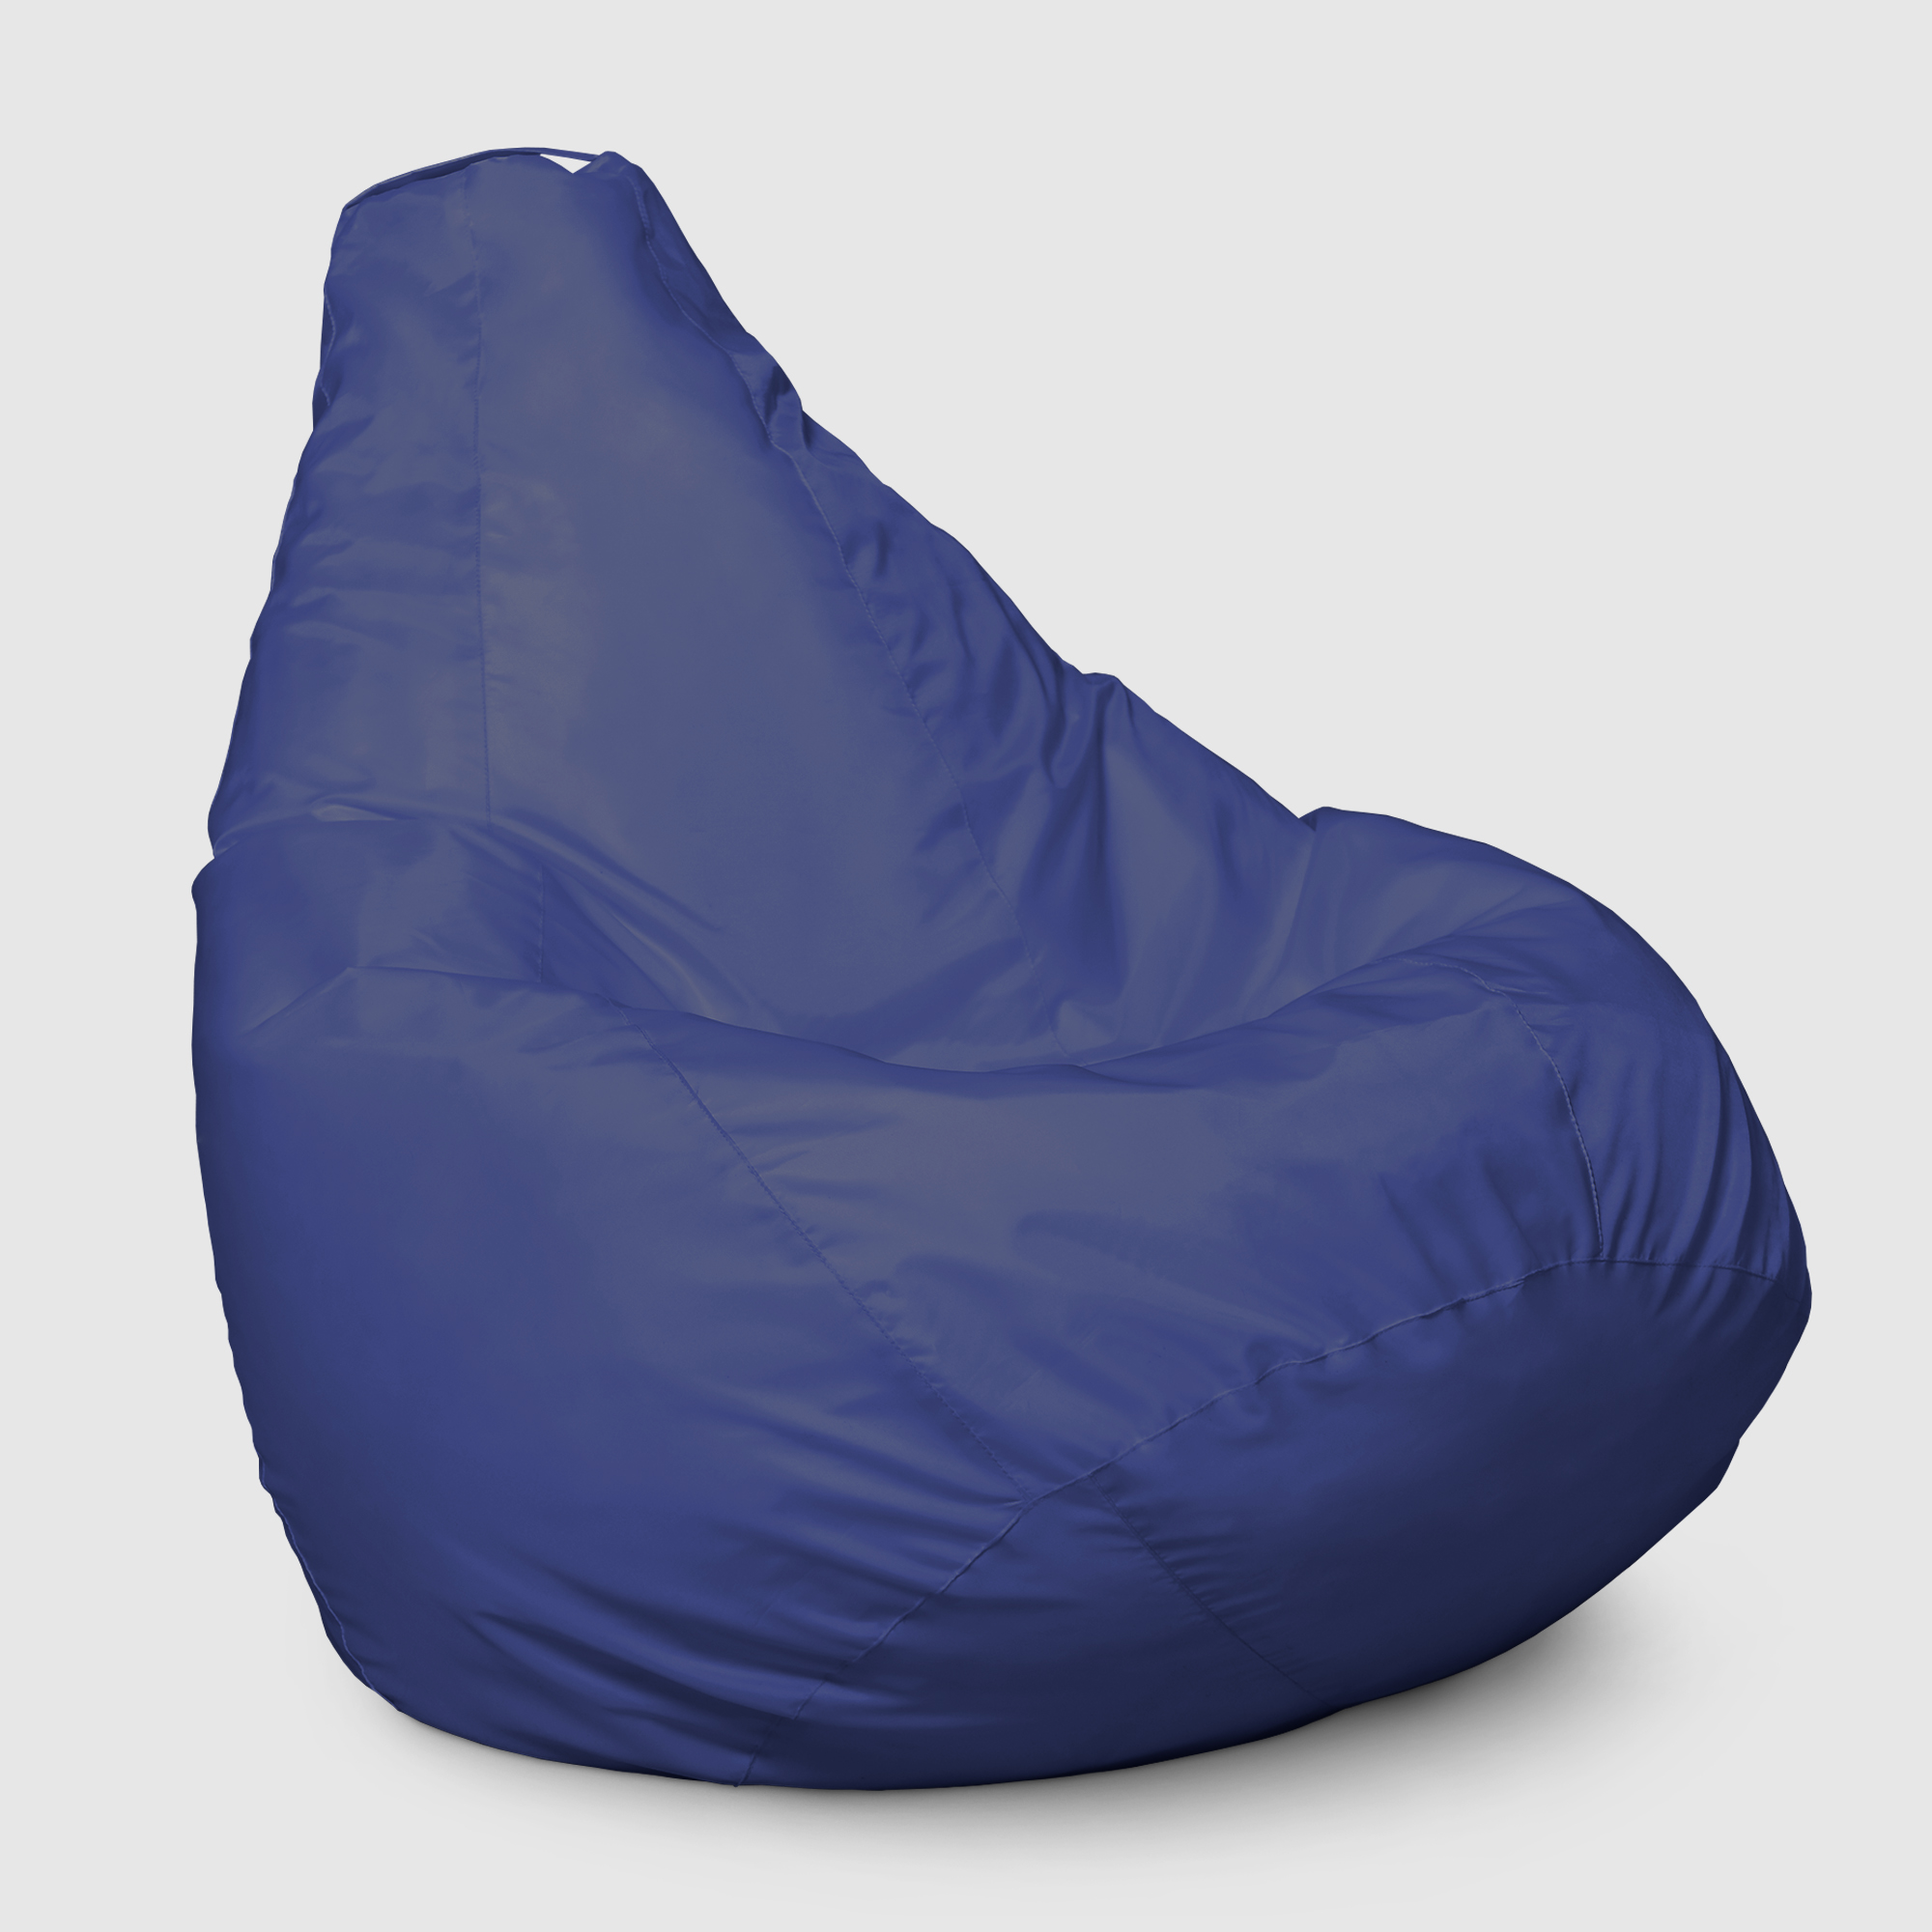 Кресло мешок Dreambag Меган xl темно-синее 85х85х125 см кресло мешок dreambag меган xl черное 85х85х125 см